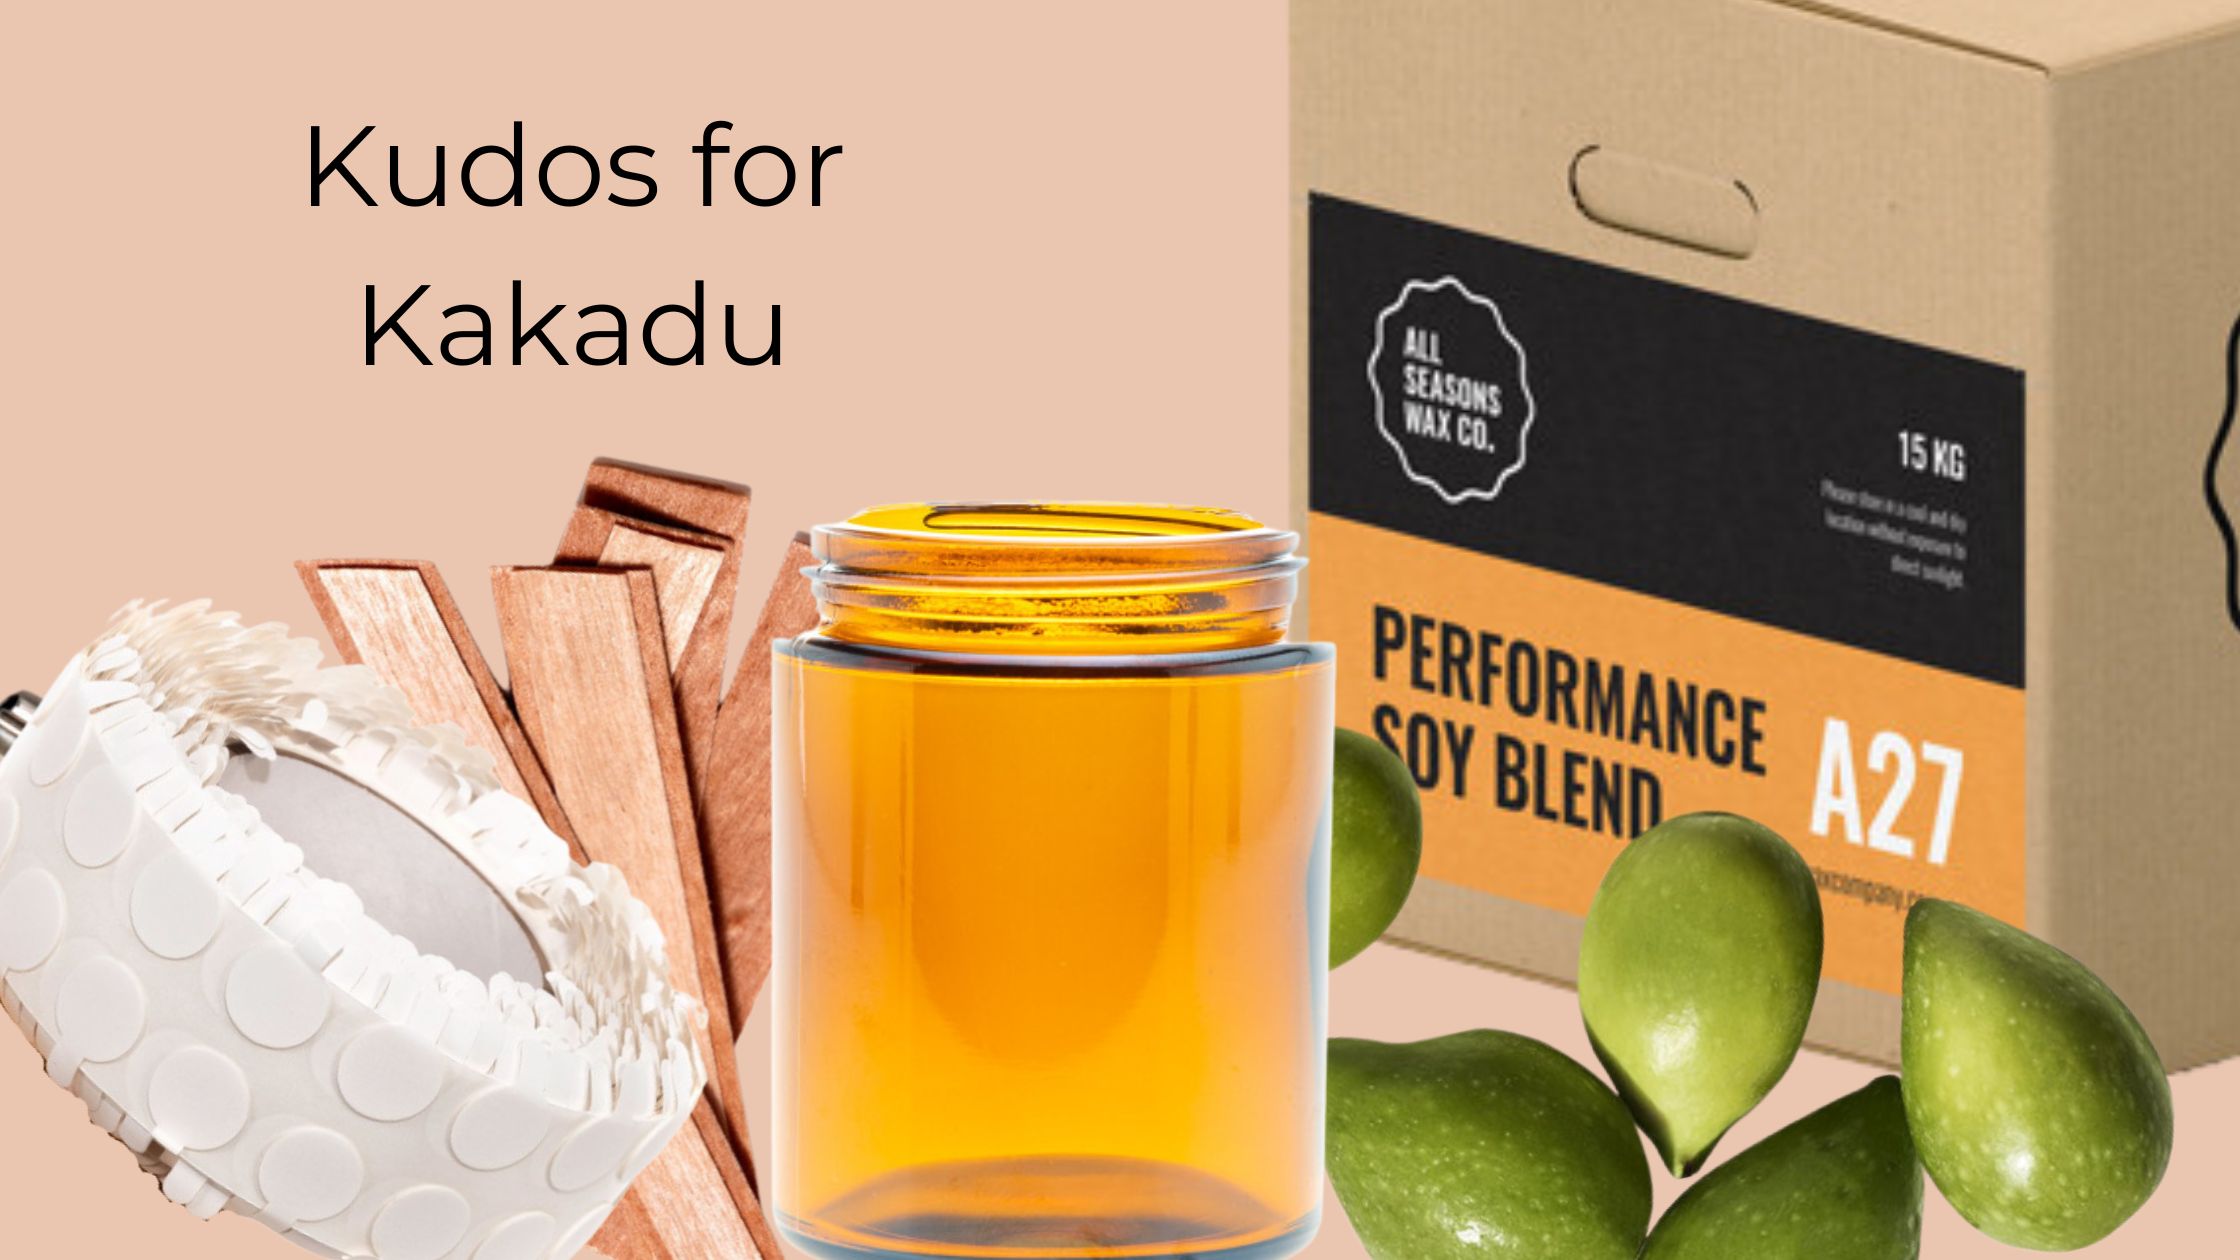 Ingredients for 'Kudos for Kakadu' candle